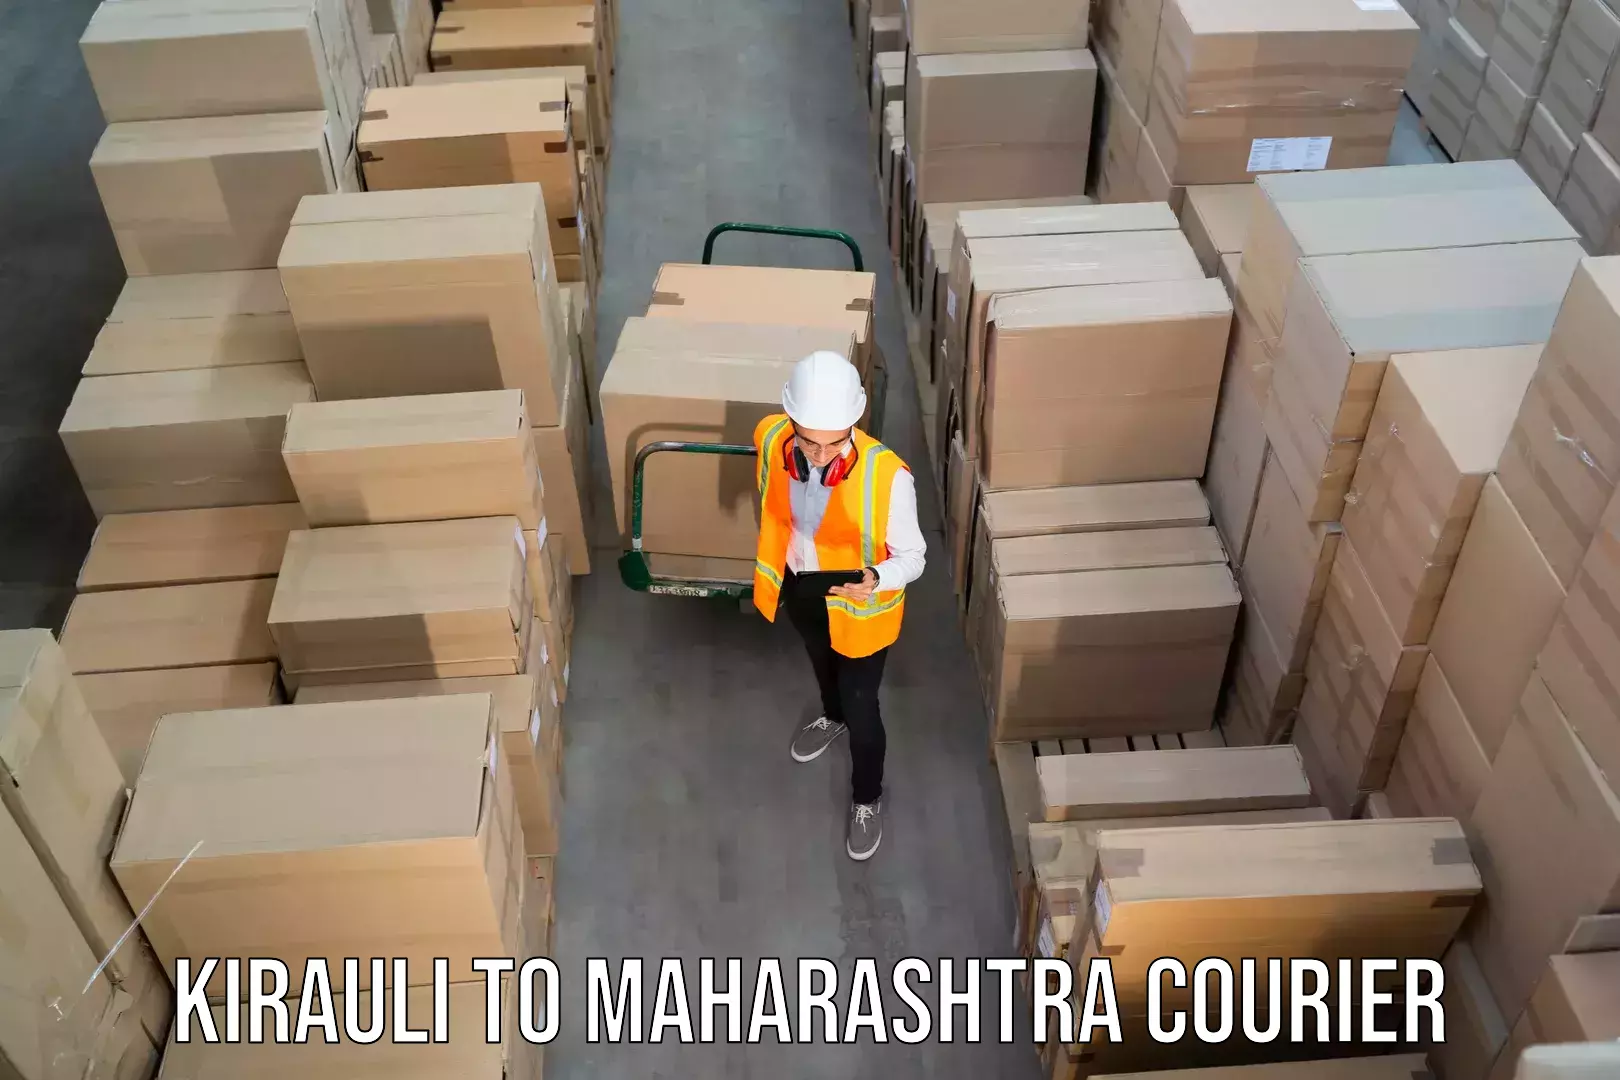 Digital courier platforms Kirauli to Mumbai